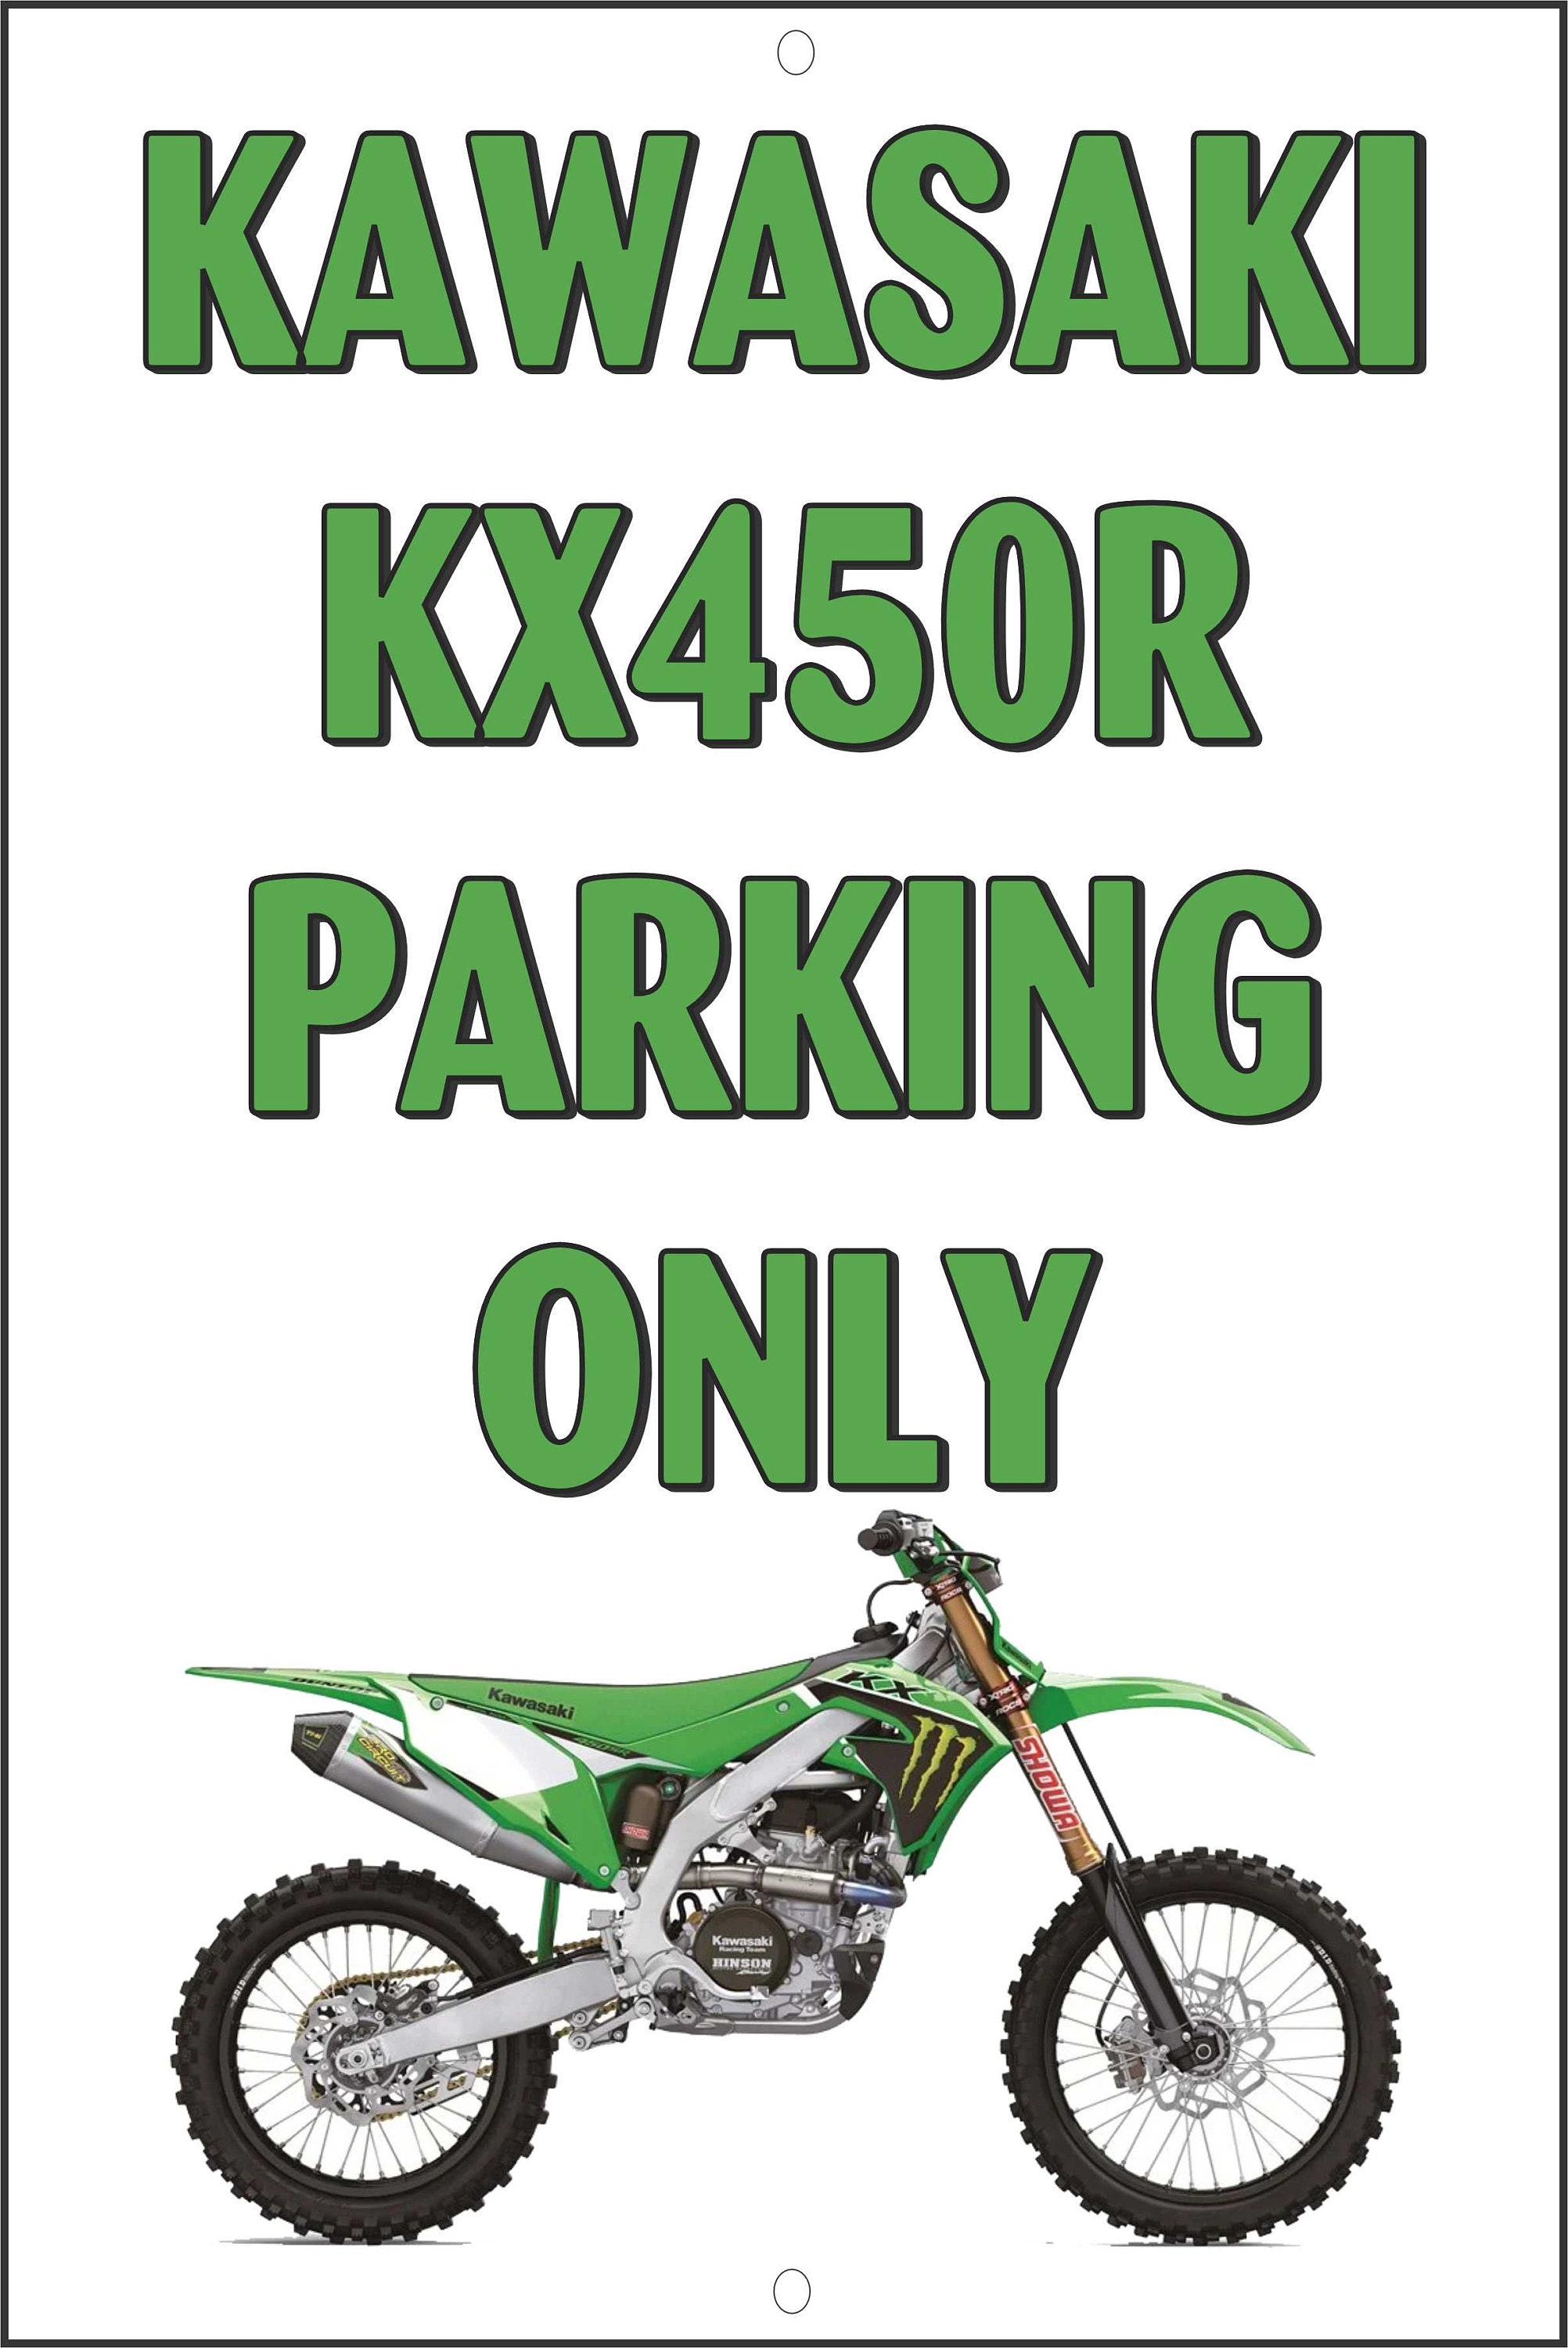 Kawasaki kx450r motocross for sale  